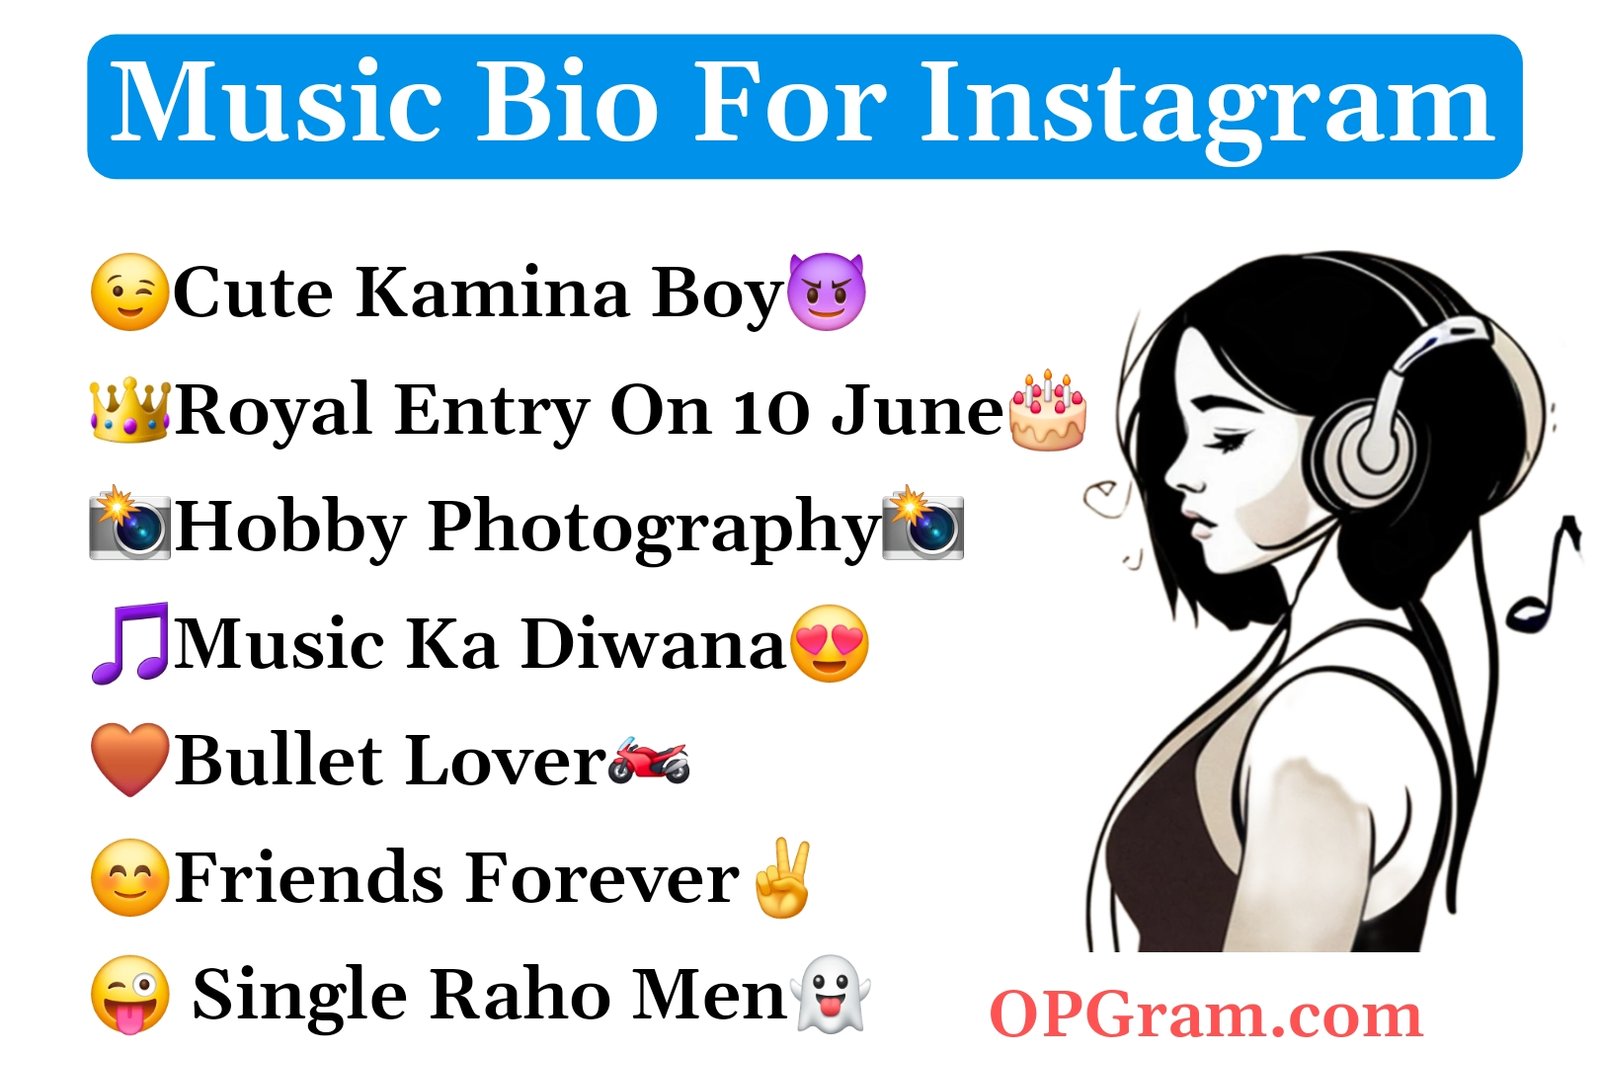 Music Bio For Instagram